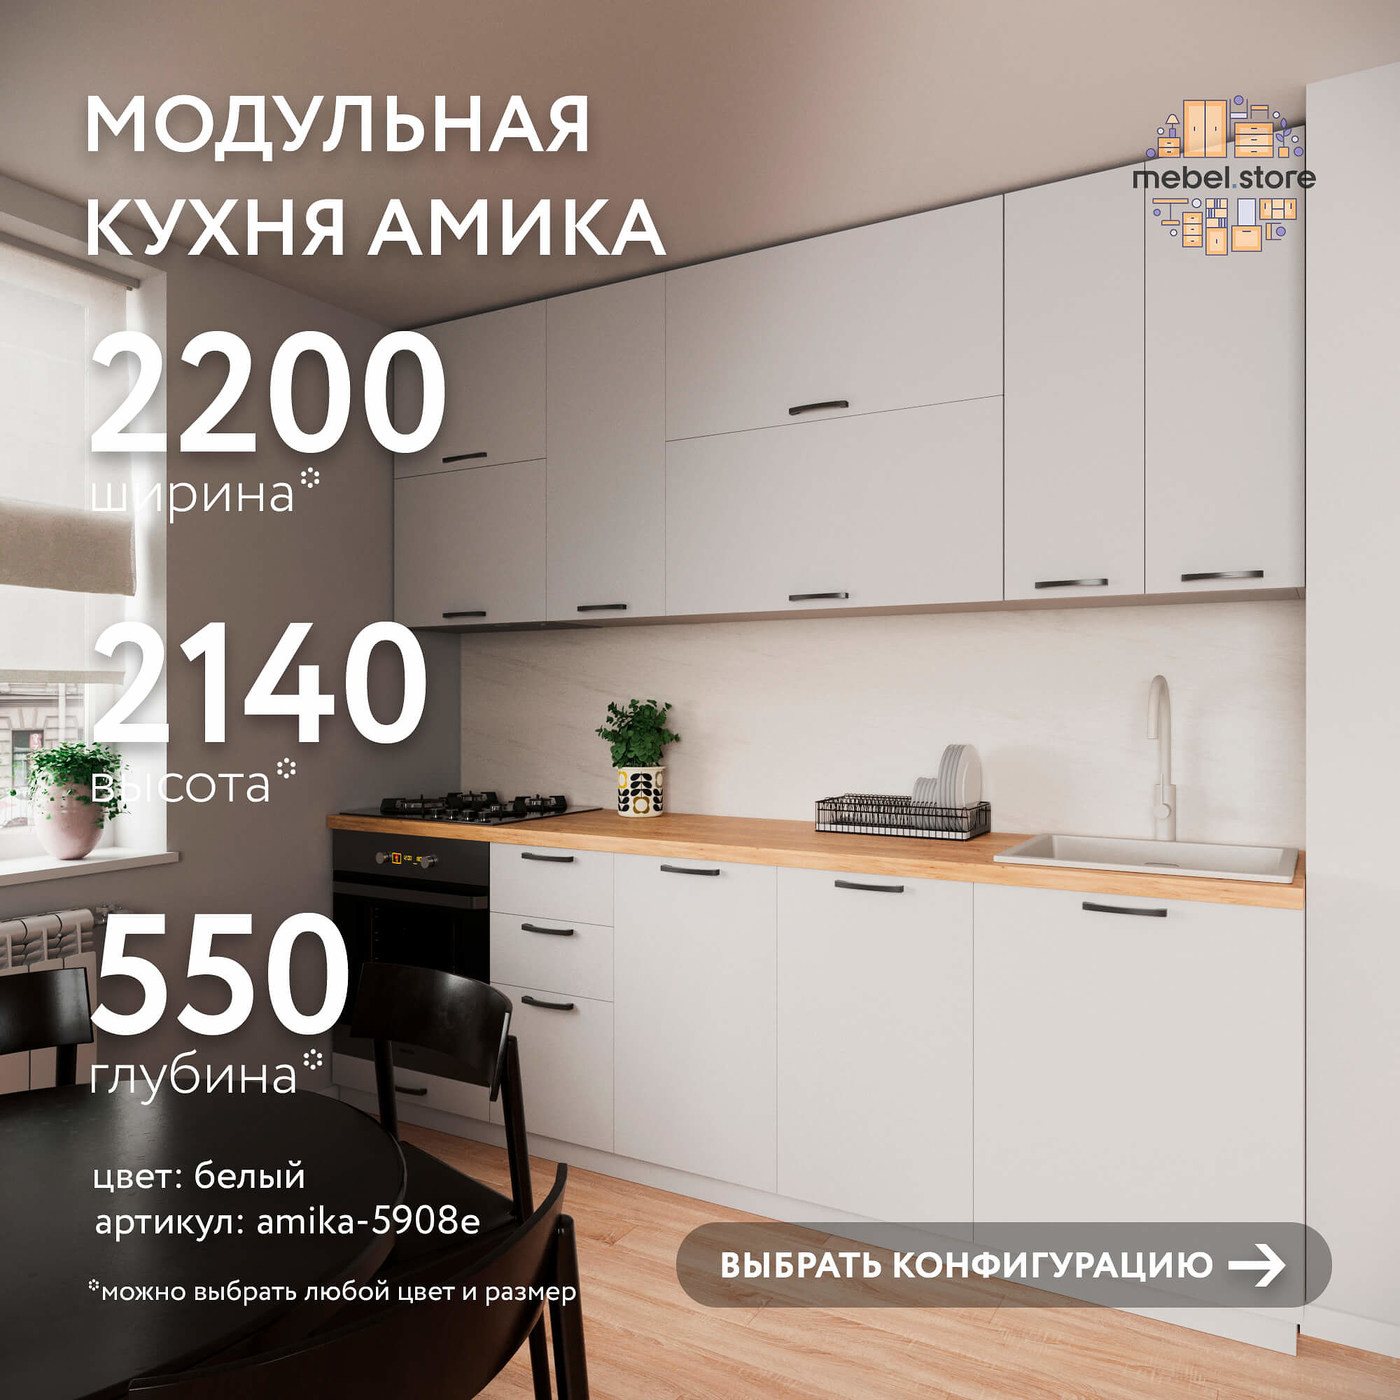 Модульная кухня Амика-5908e минимализм гарнитур - фото 1 large